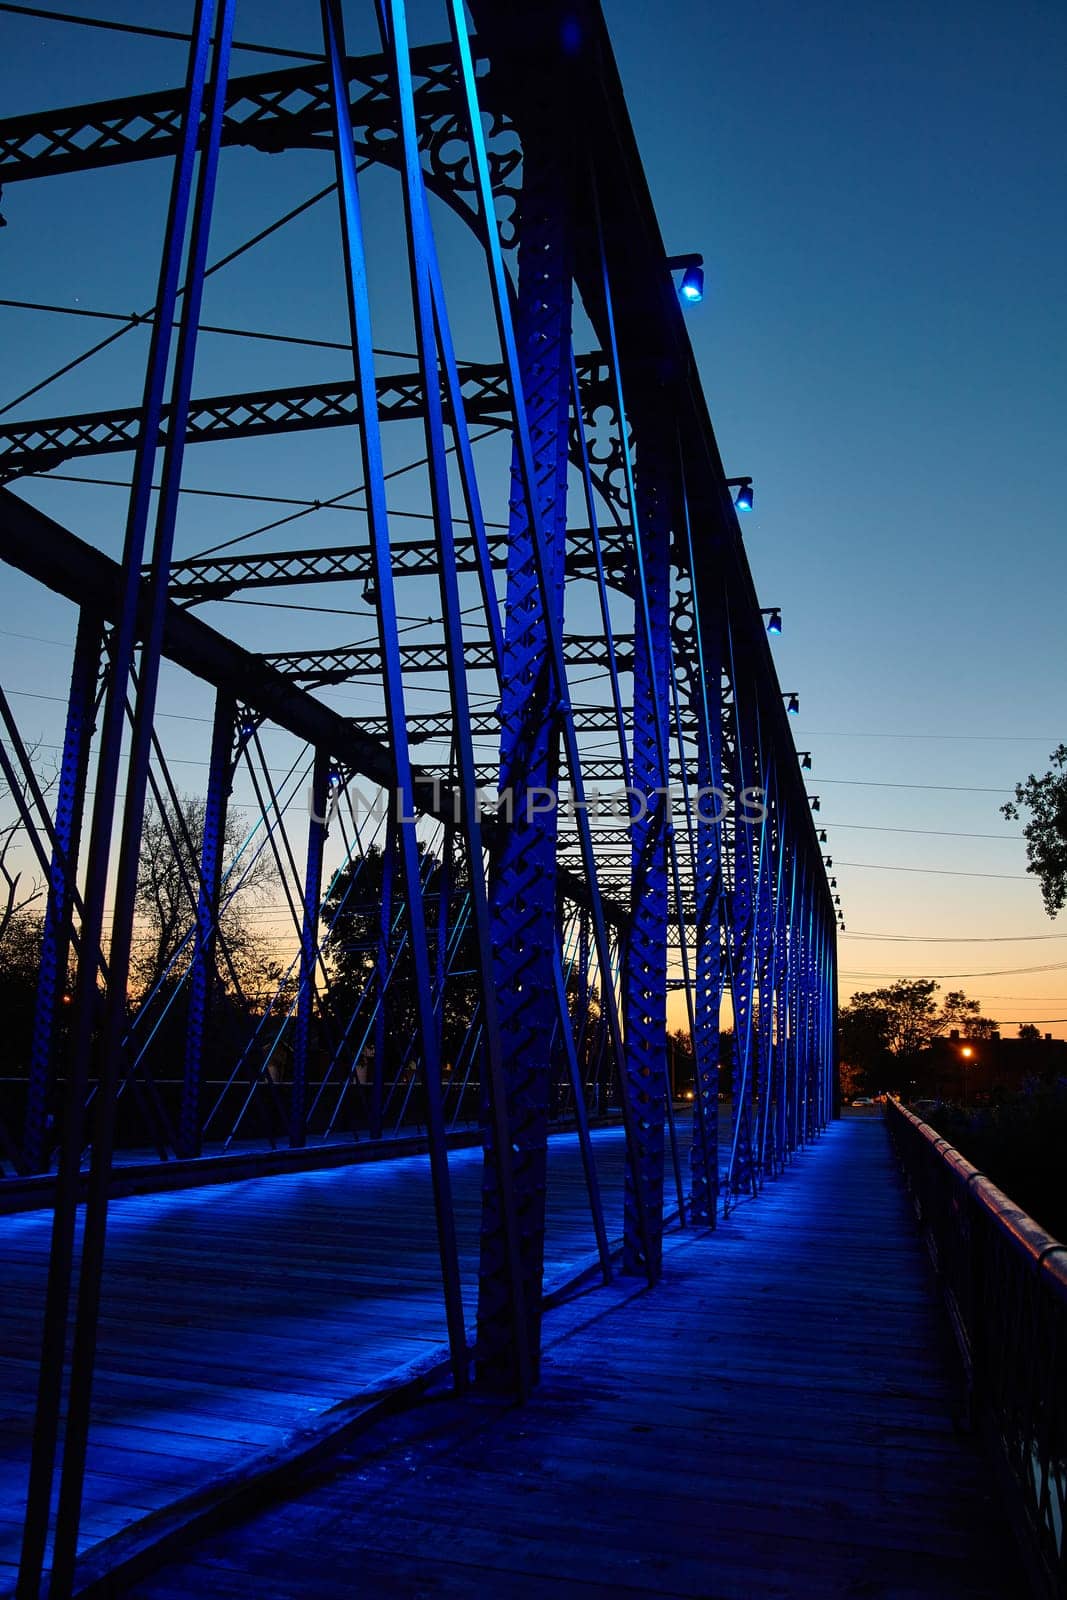 Twilight Glow on Blue Lit Pedestrian Wells Street Bridge, Fort Wayne by njproductions